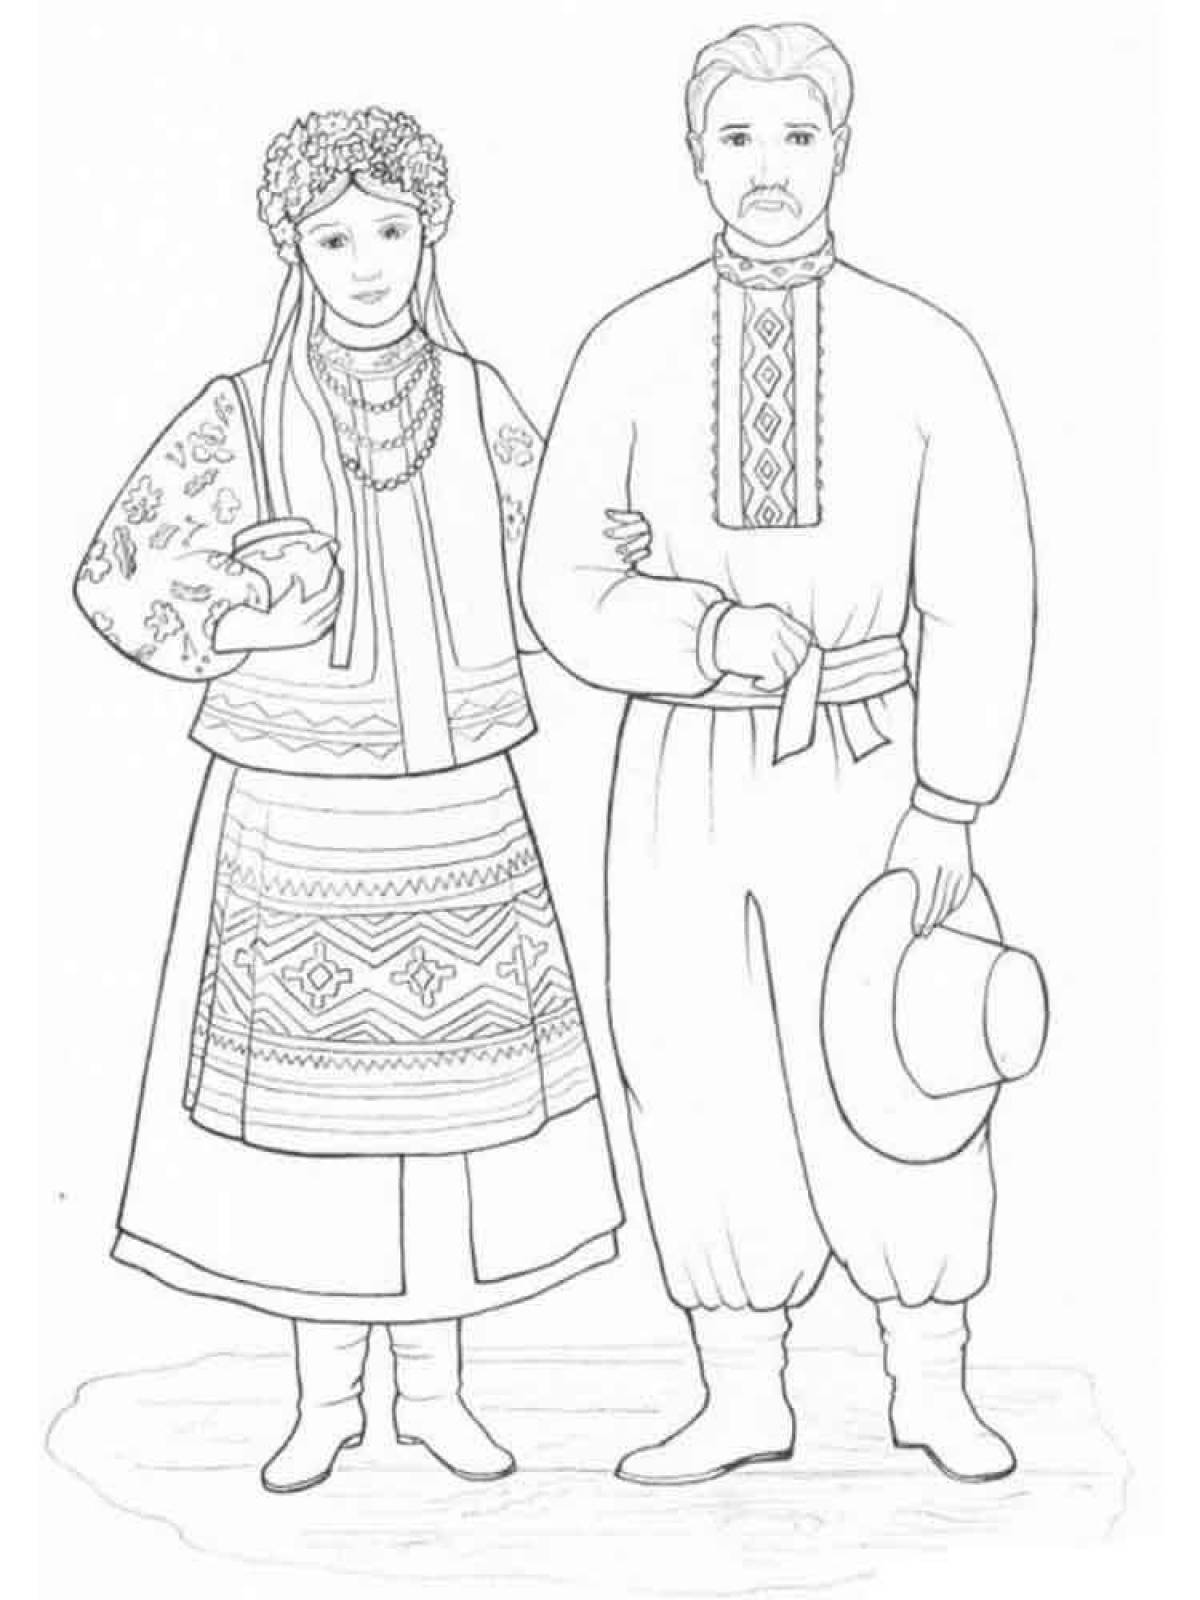 Real Russian folk costume for men